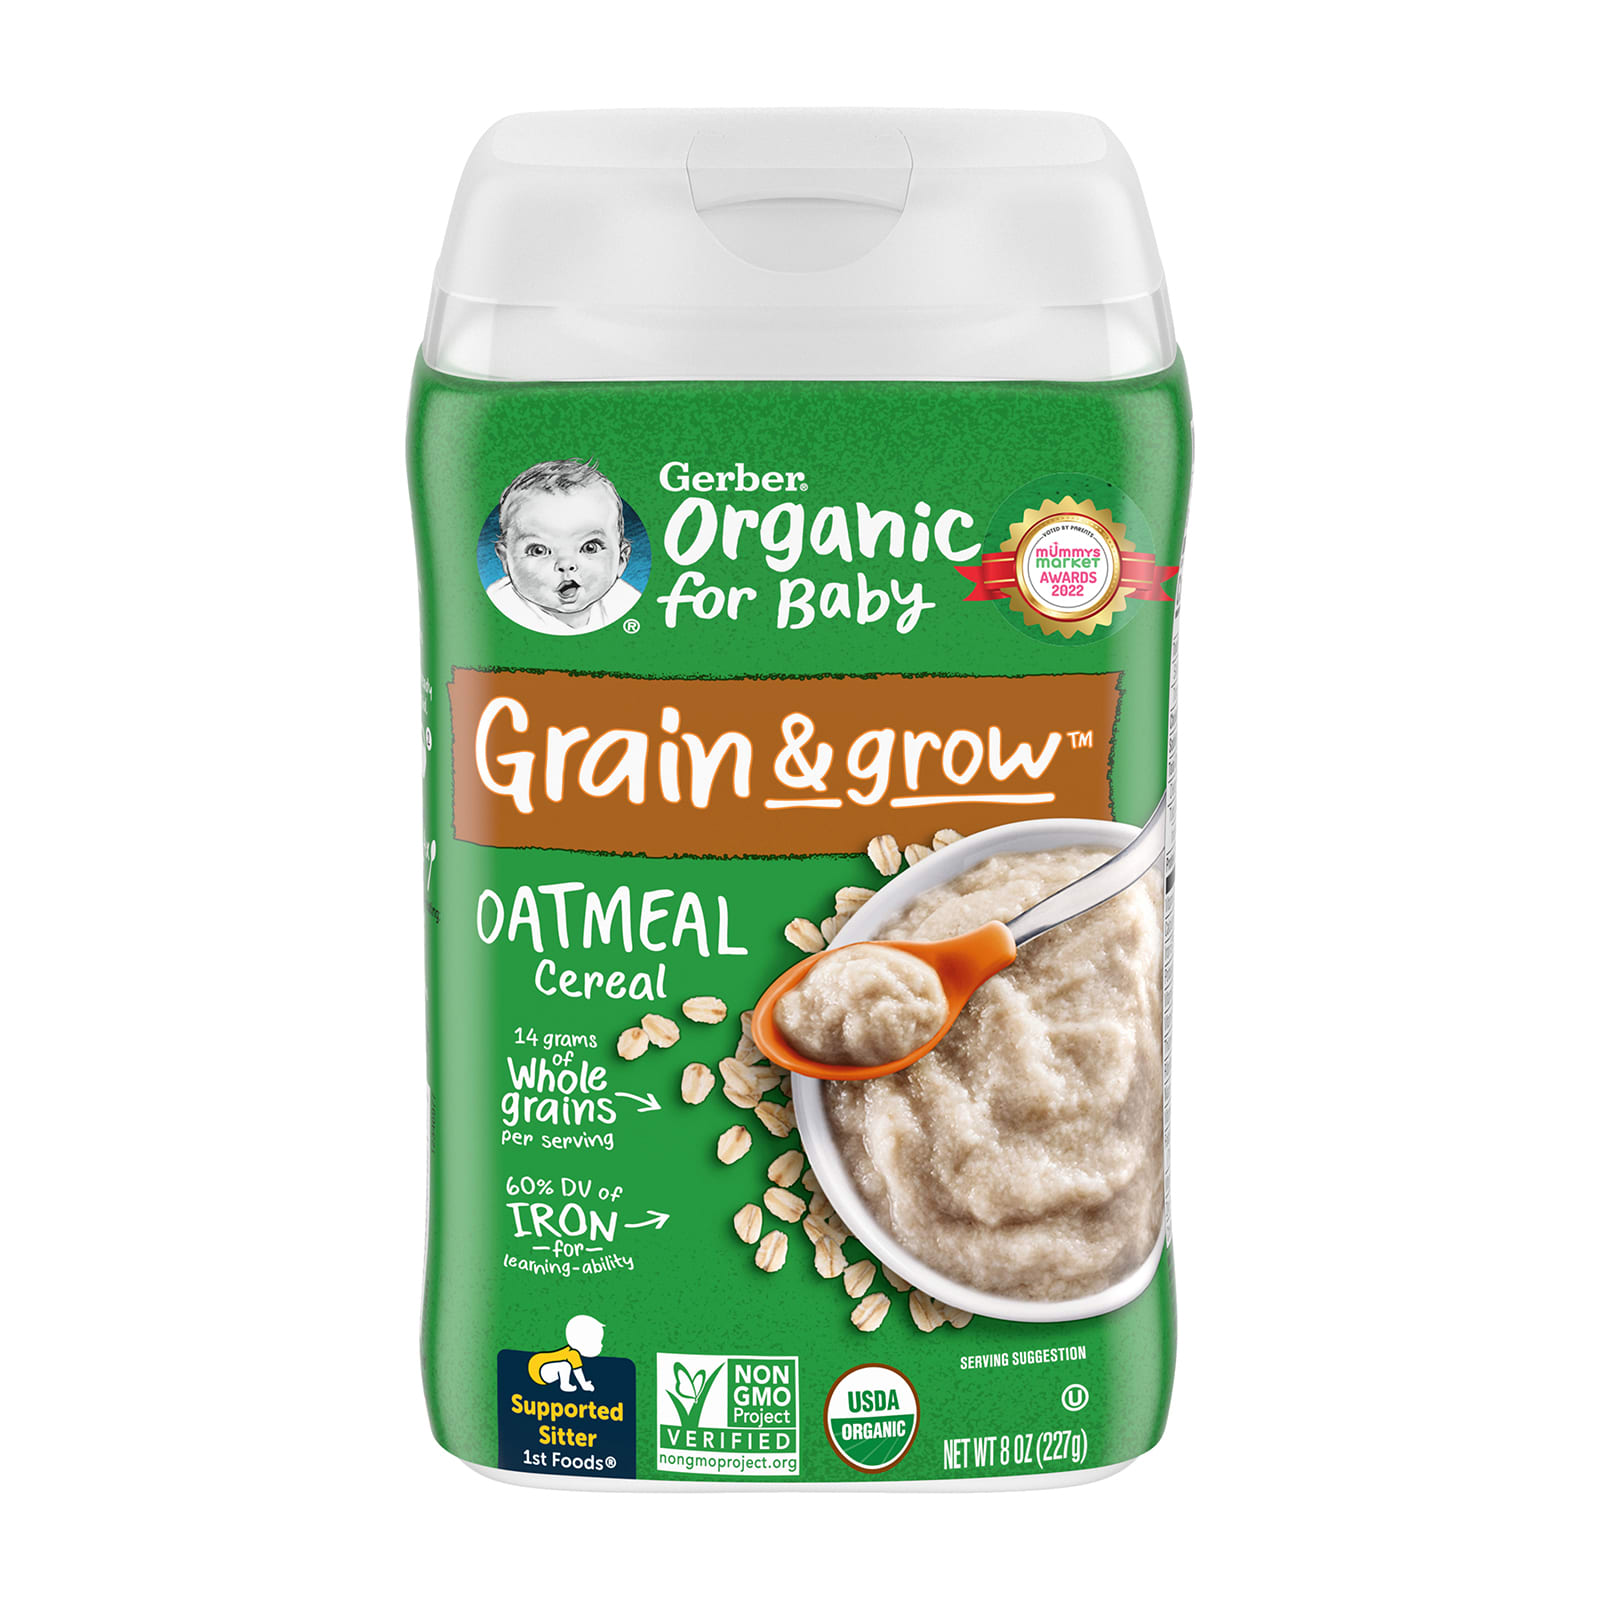 Gerber Organic Oatmeal Cereal